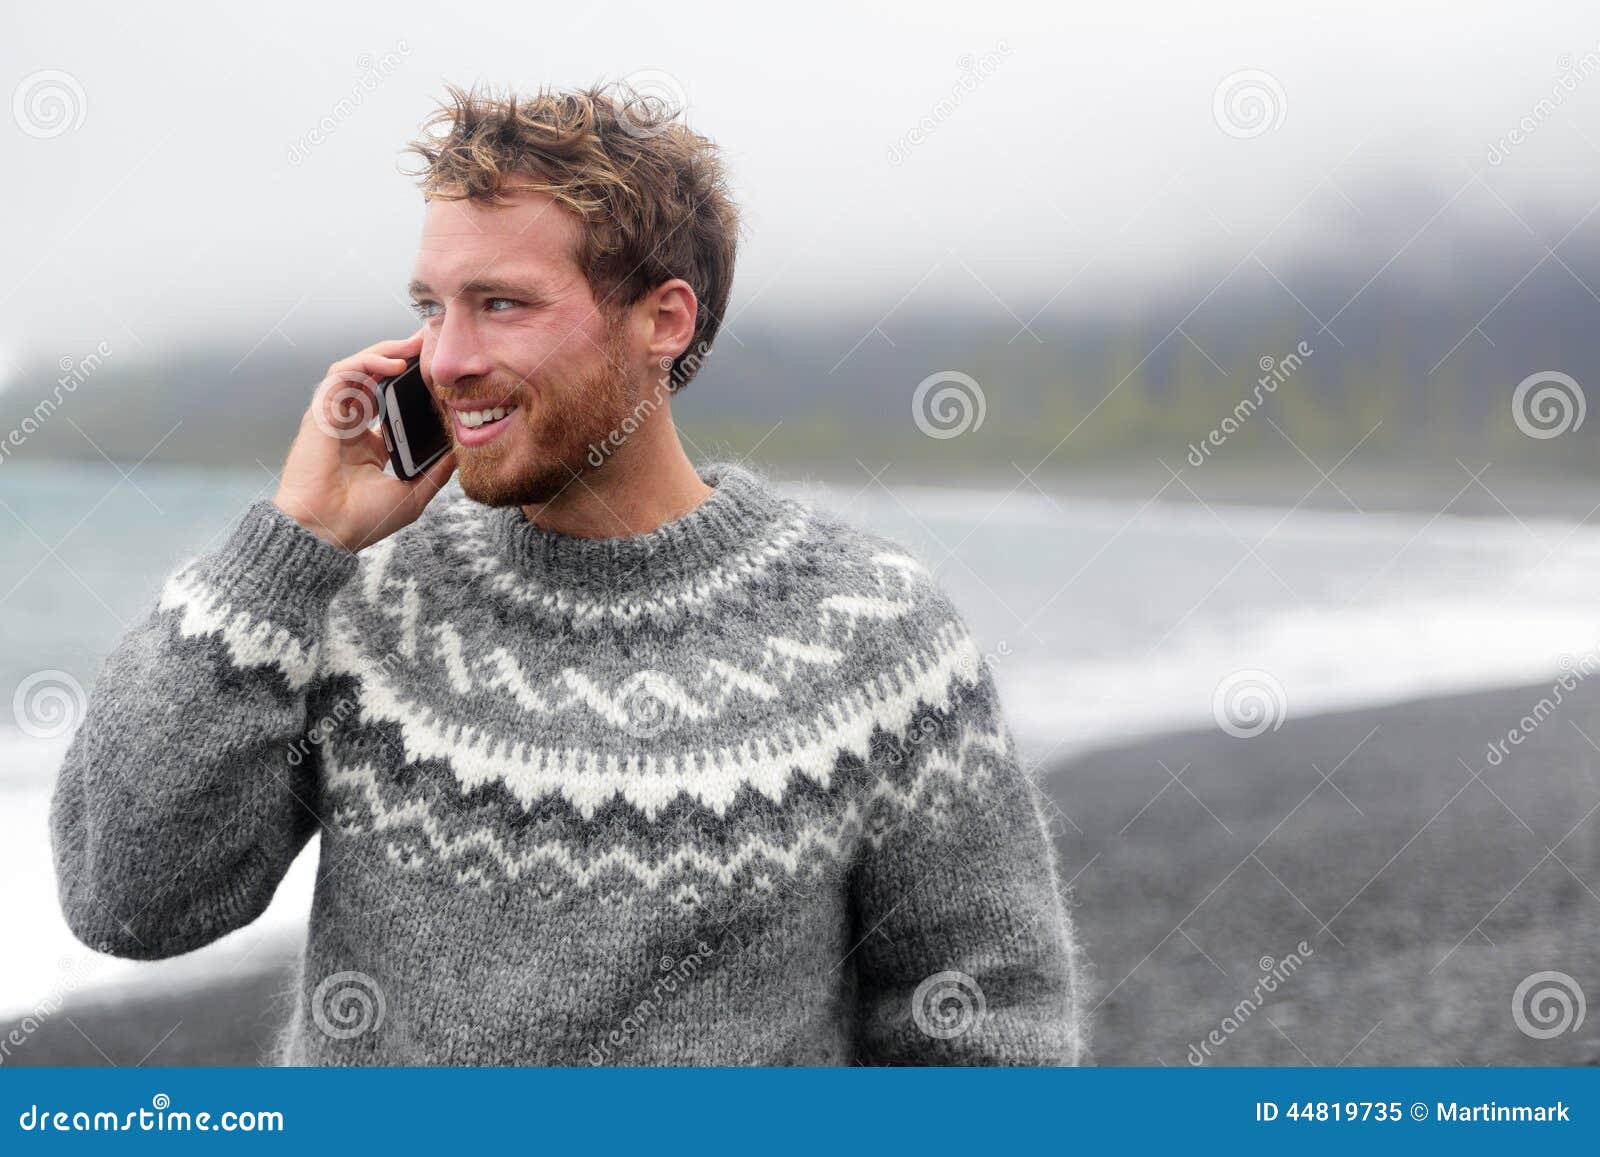 Smart Phone Man Talking on Phone on Beach, Iceland Stock Image - Image ...